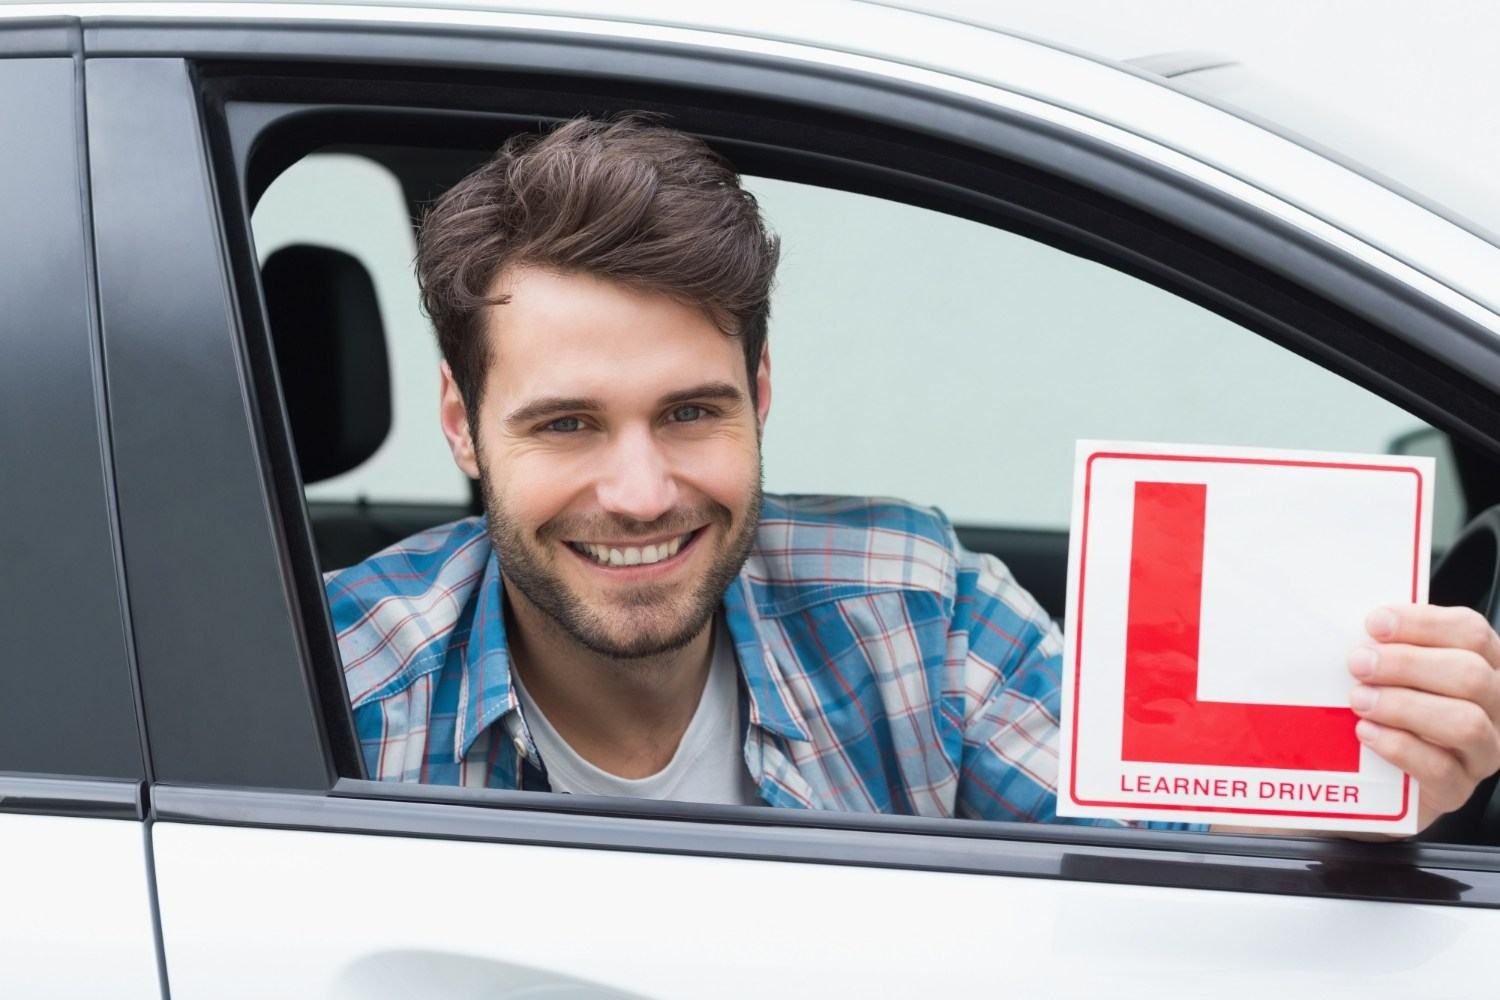 Learner Driver holding learner plate